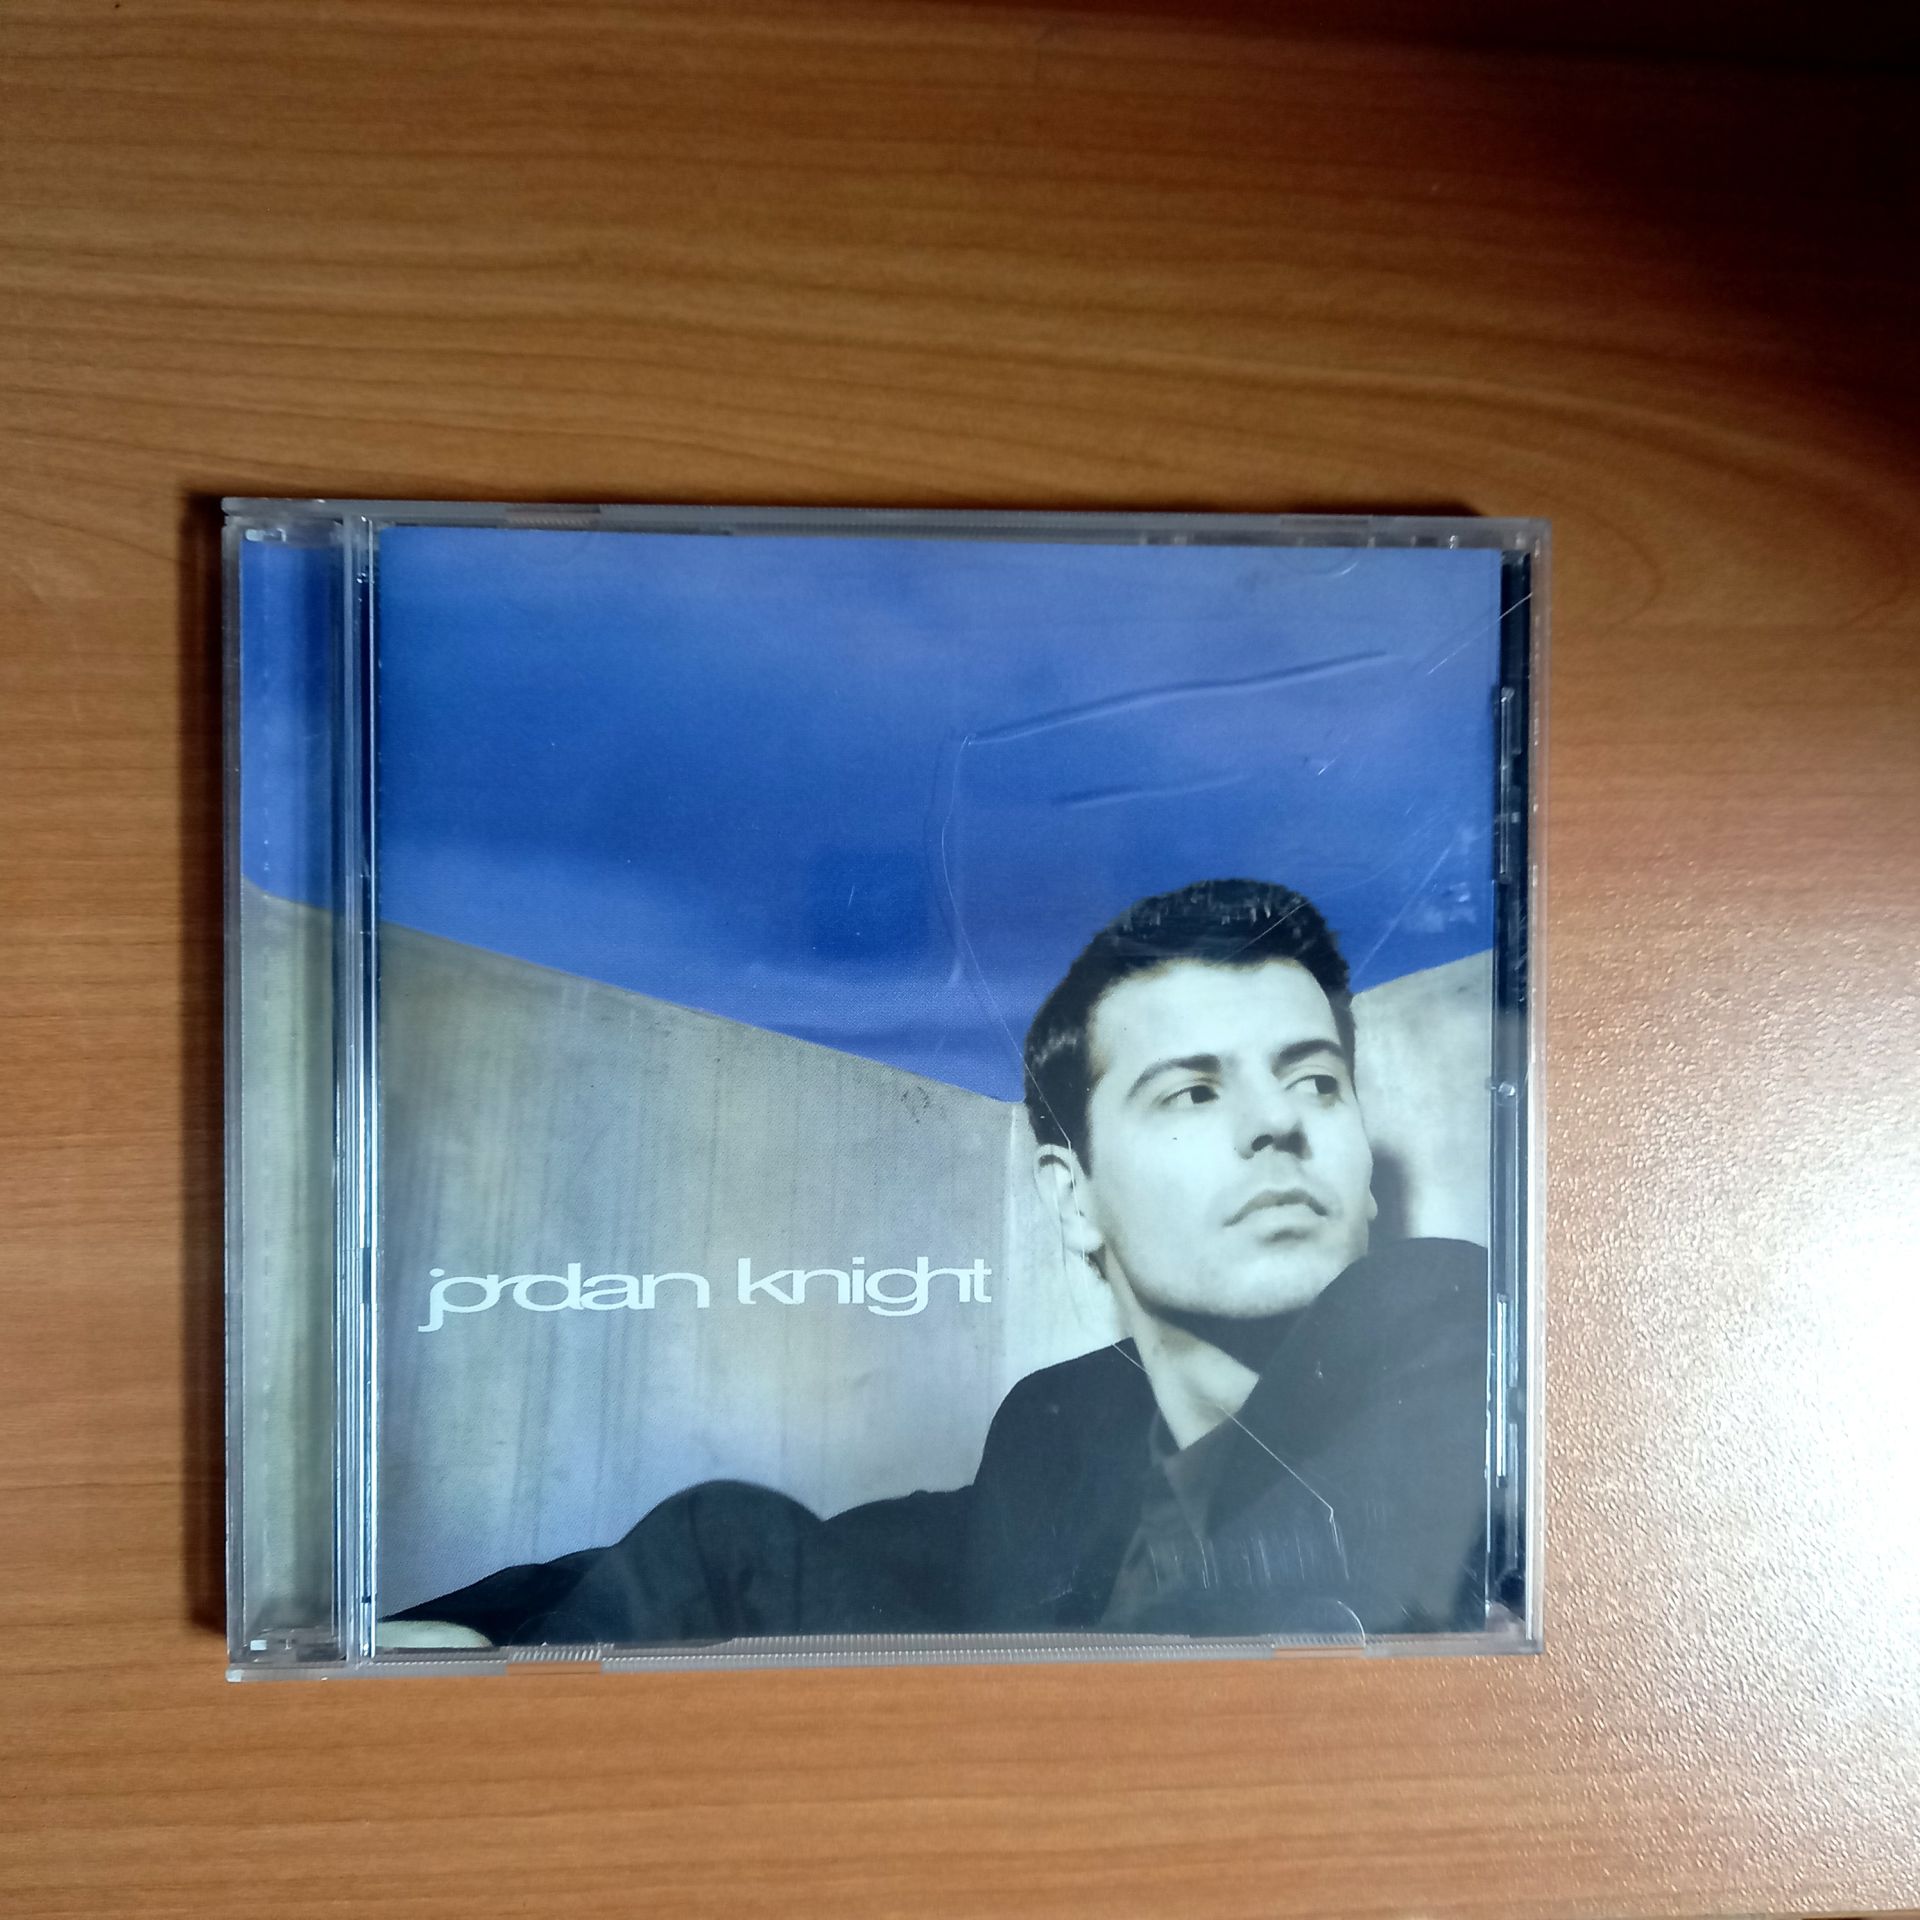 JORDAN KNIGHT – JORDAN KNIGHT (1999) - CD 2.EL